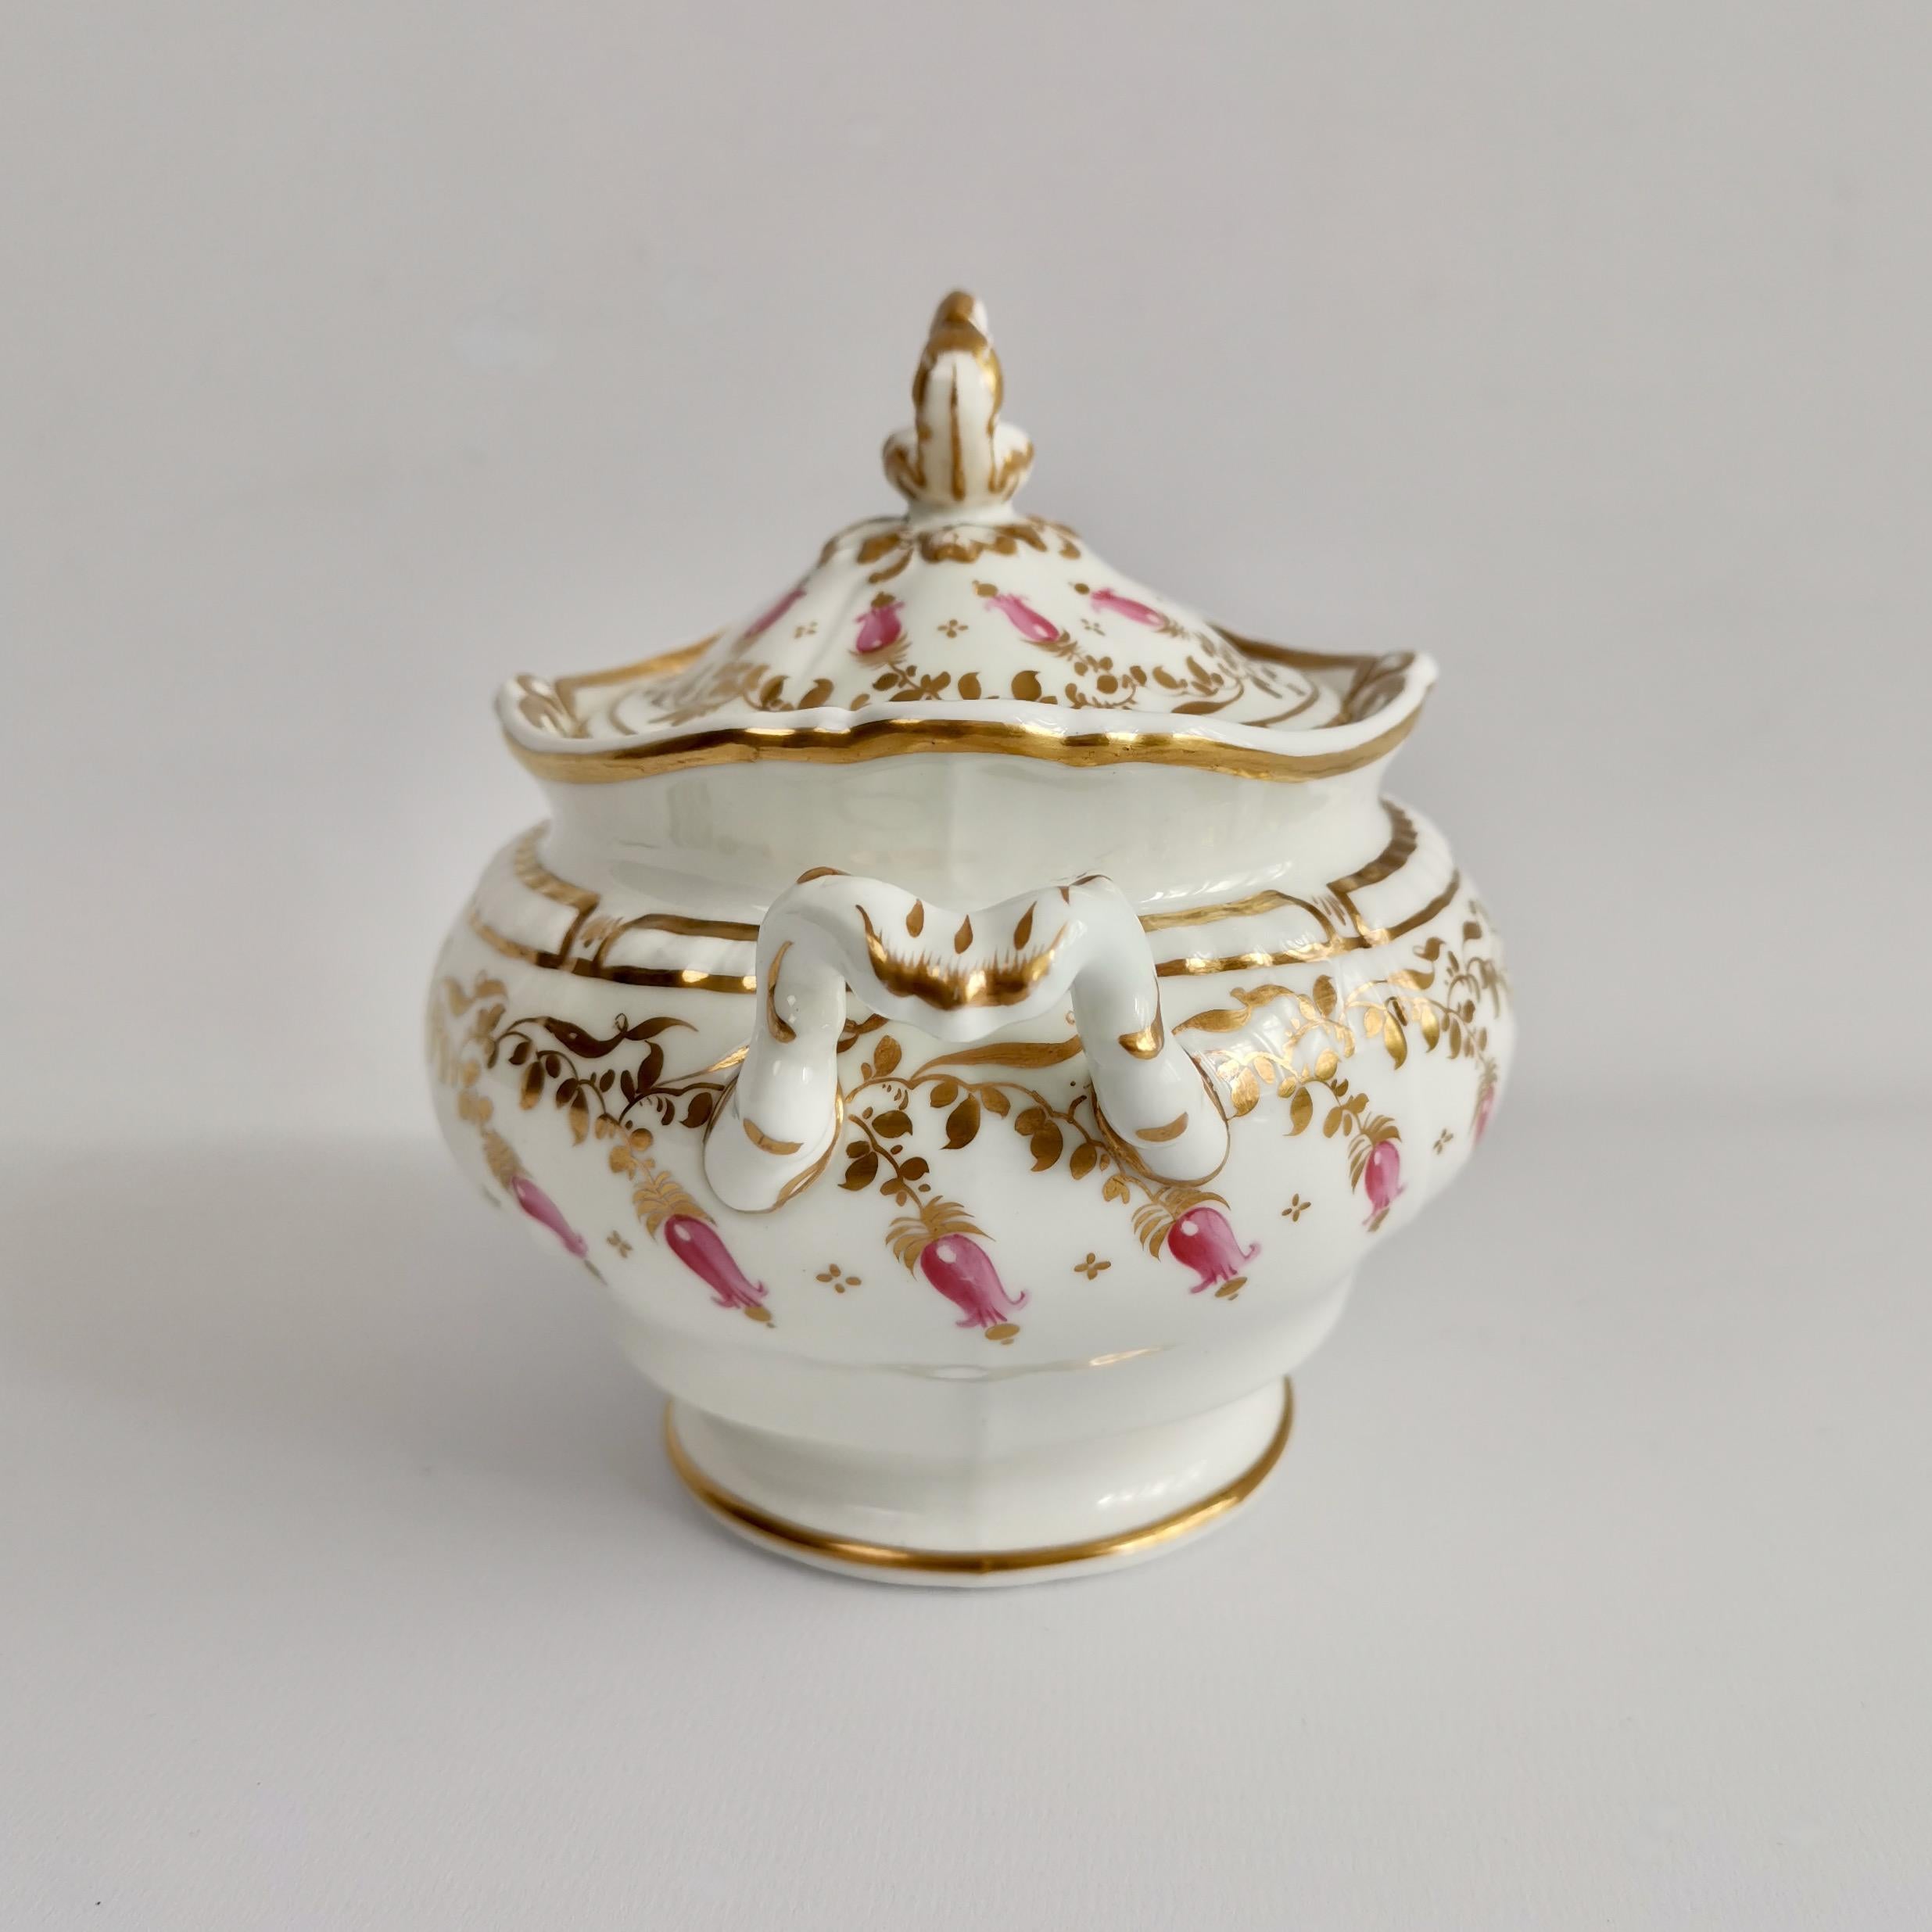 Hand-Painted Spode Felspar Porcelain Sucrier, White, Gilt and Pink Harebells, circa 1828